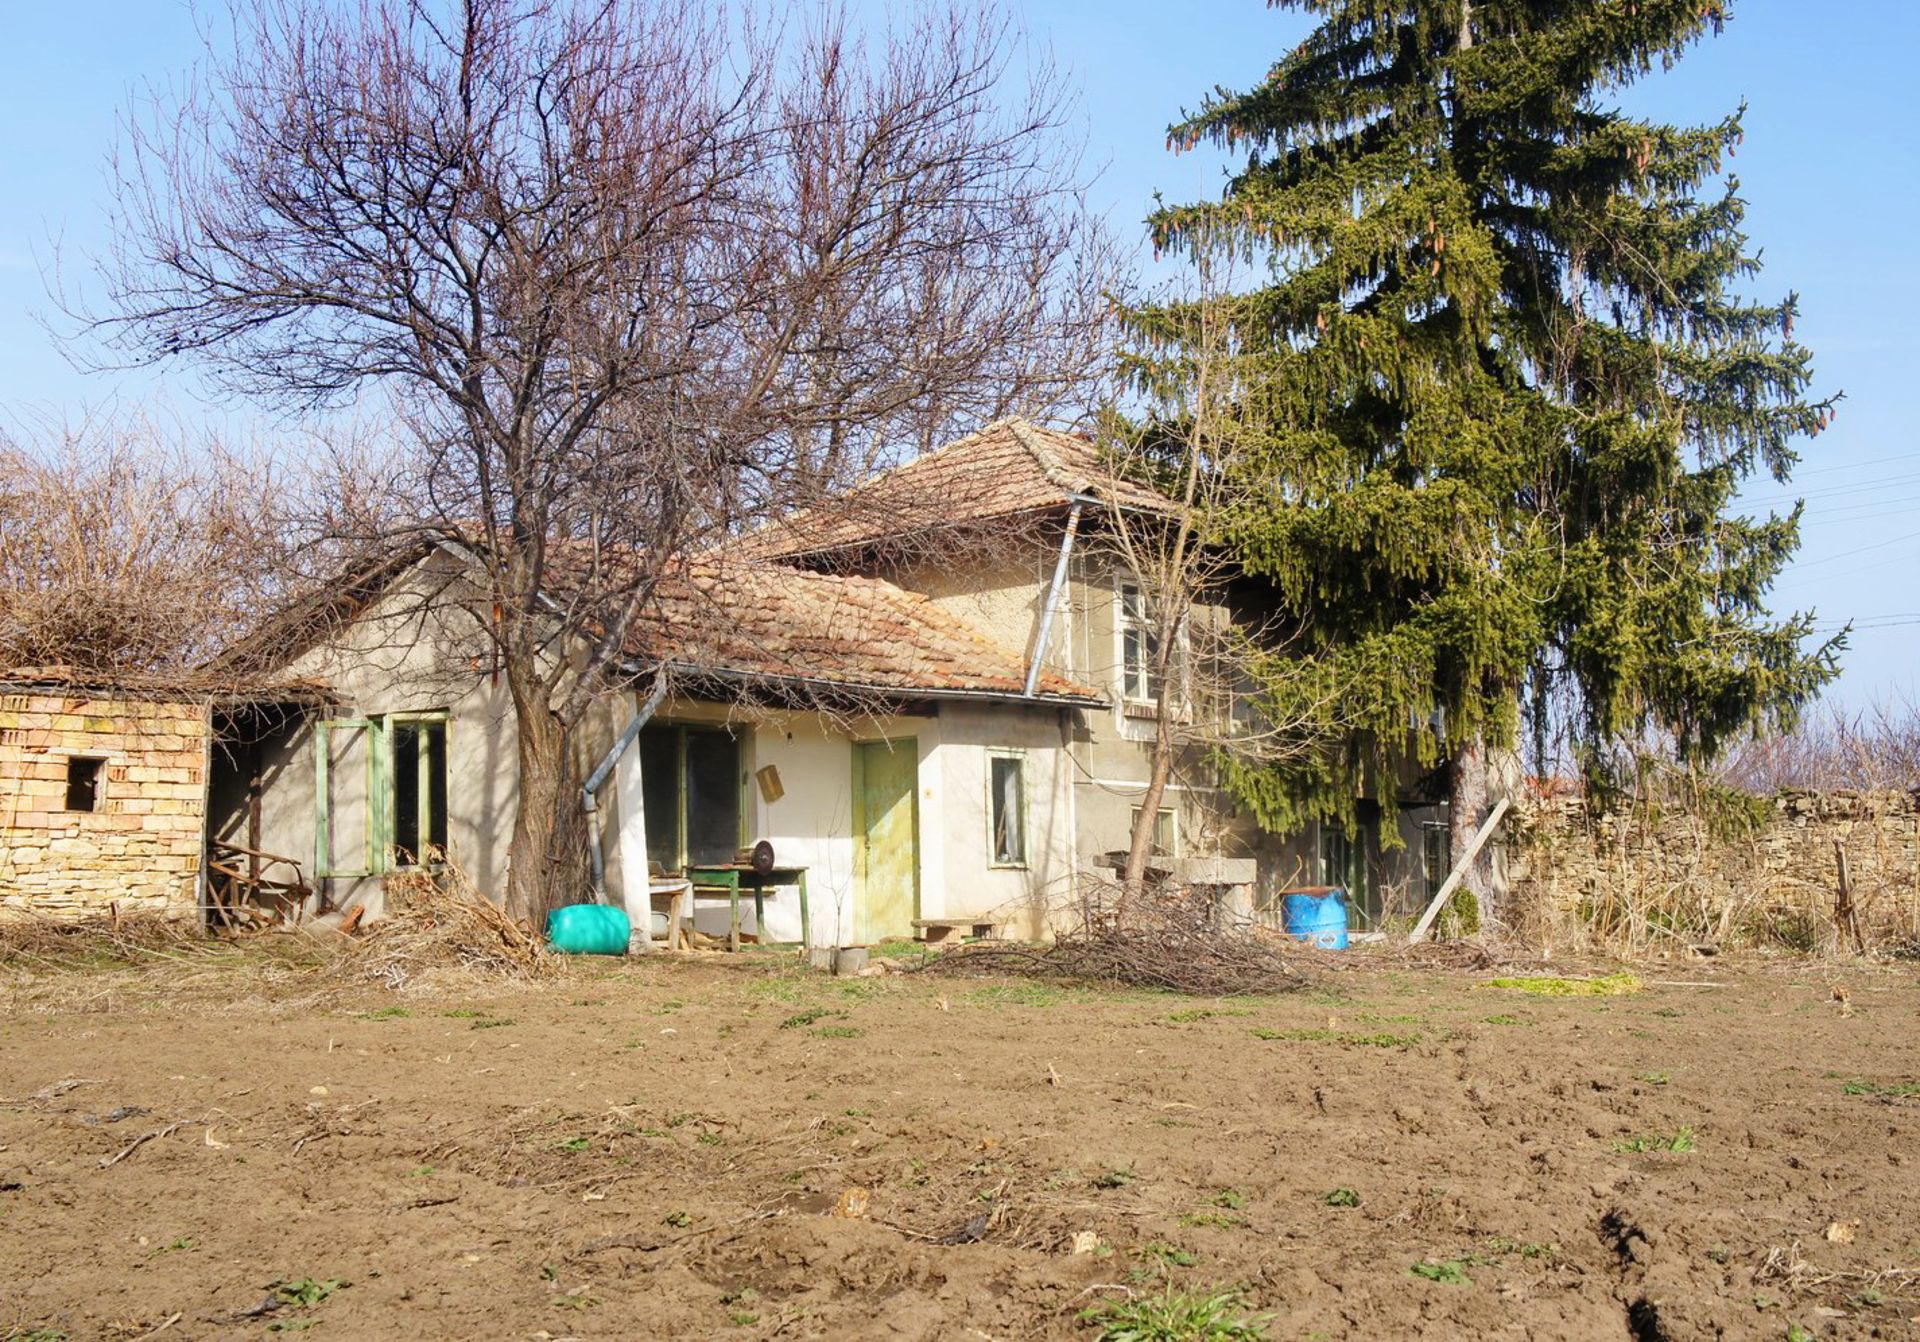 2,300 sqm Two Storey Property – 5 min from Pavlikeni, VT! - Image 2 of 25